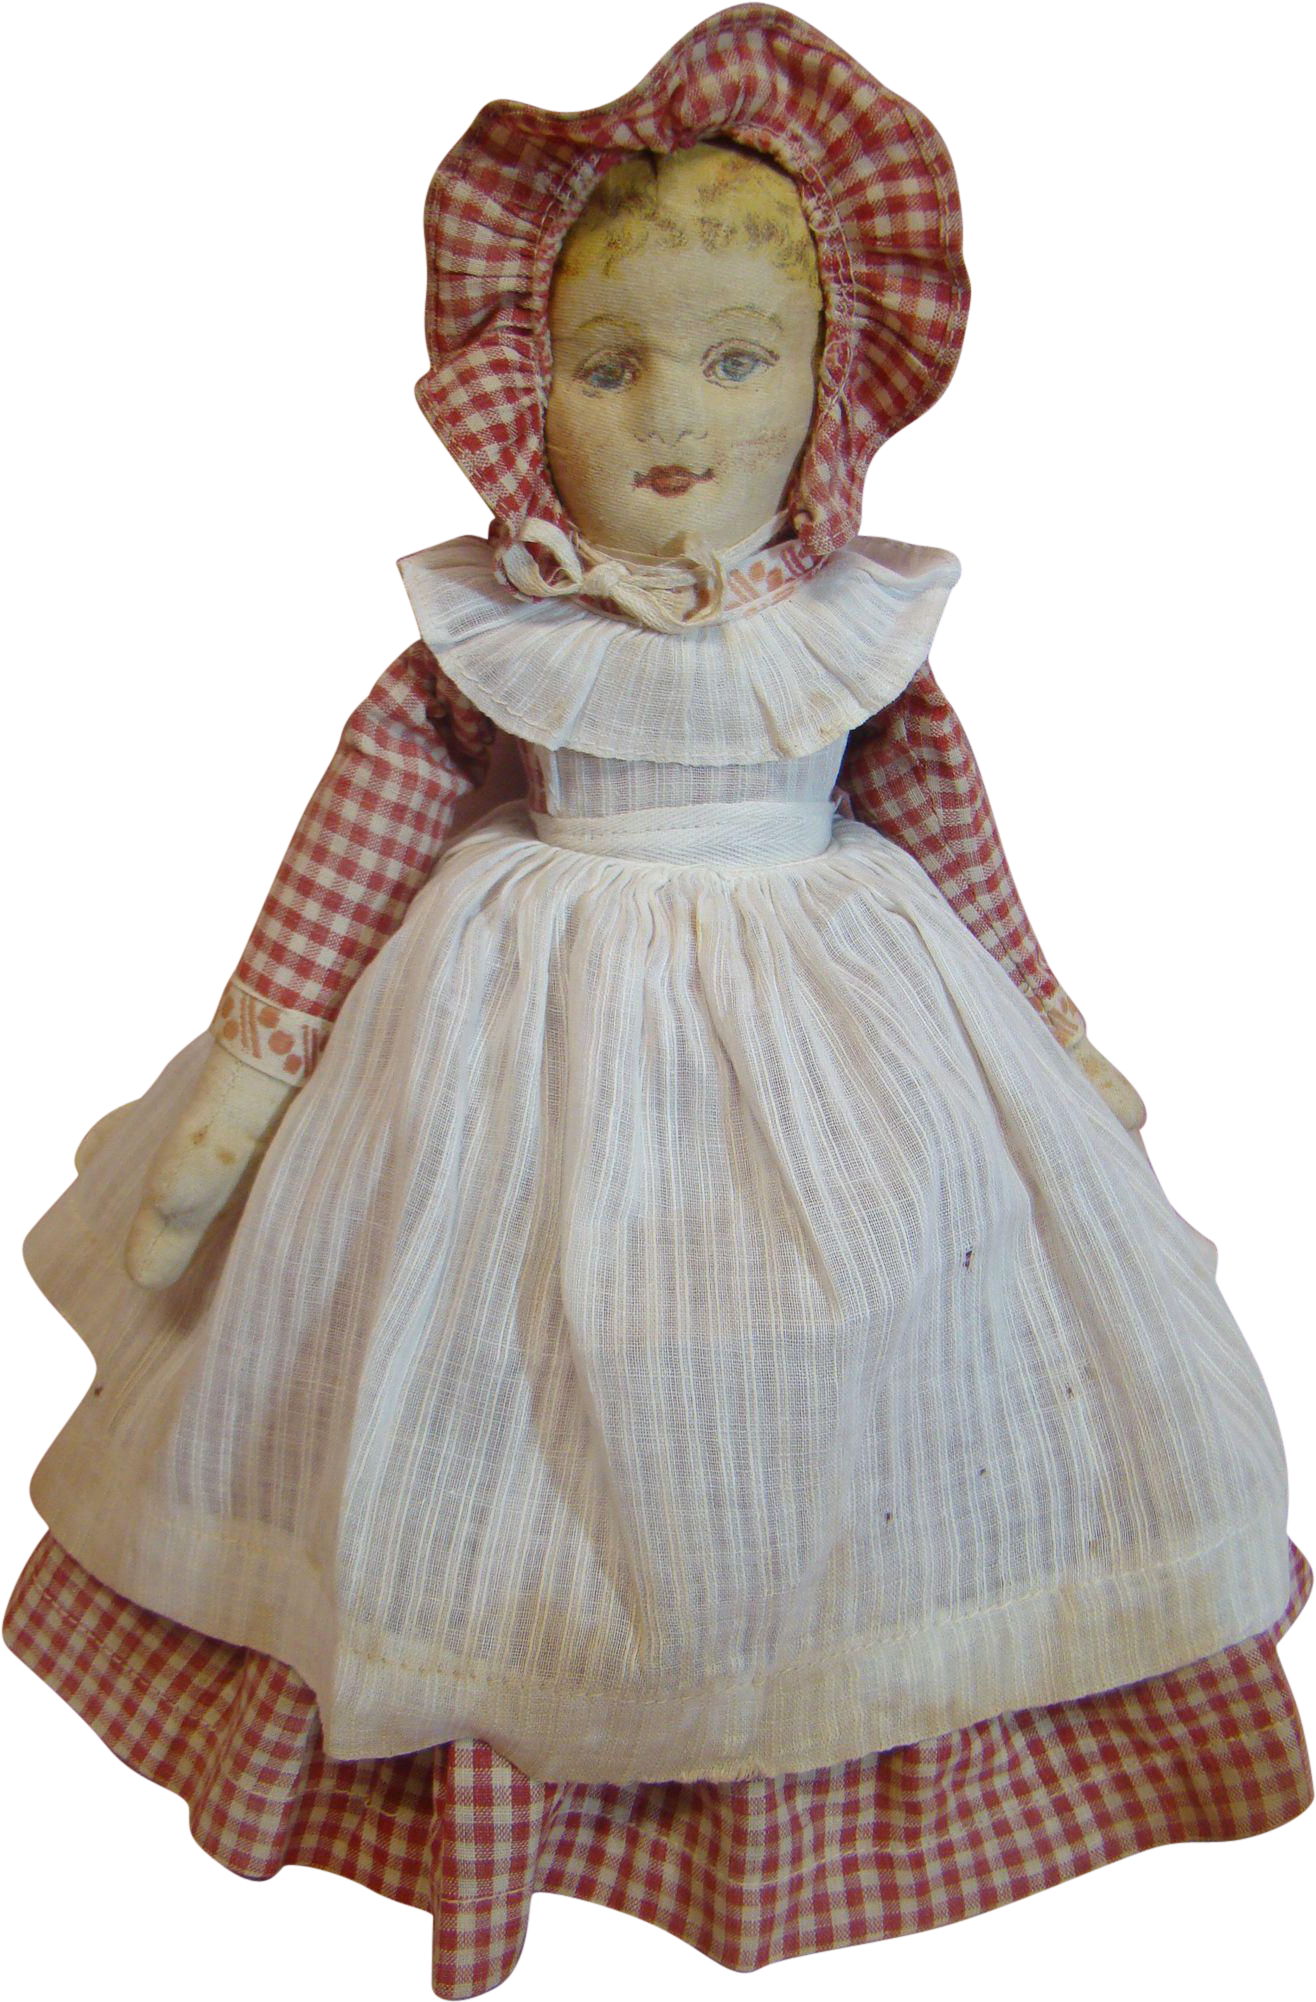 A Doll In A Dress